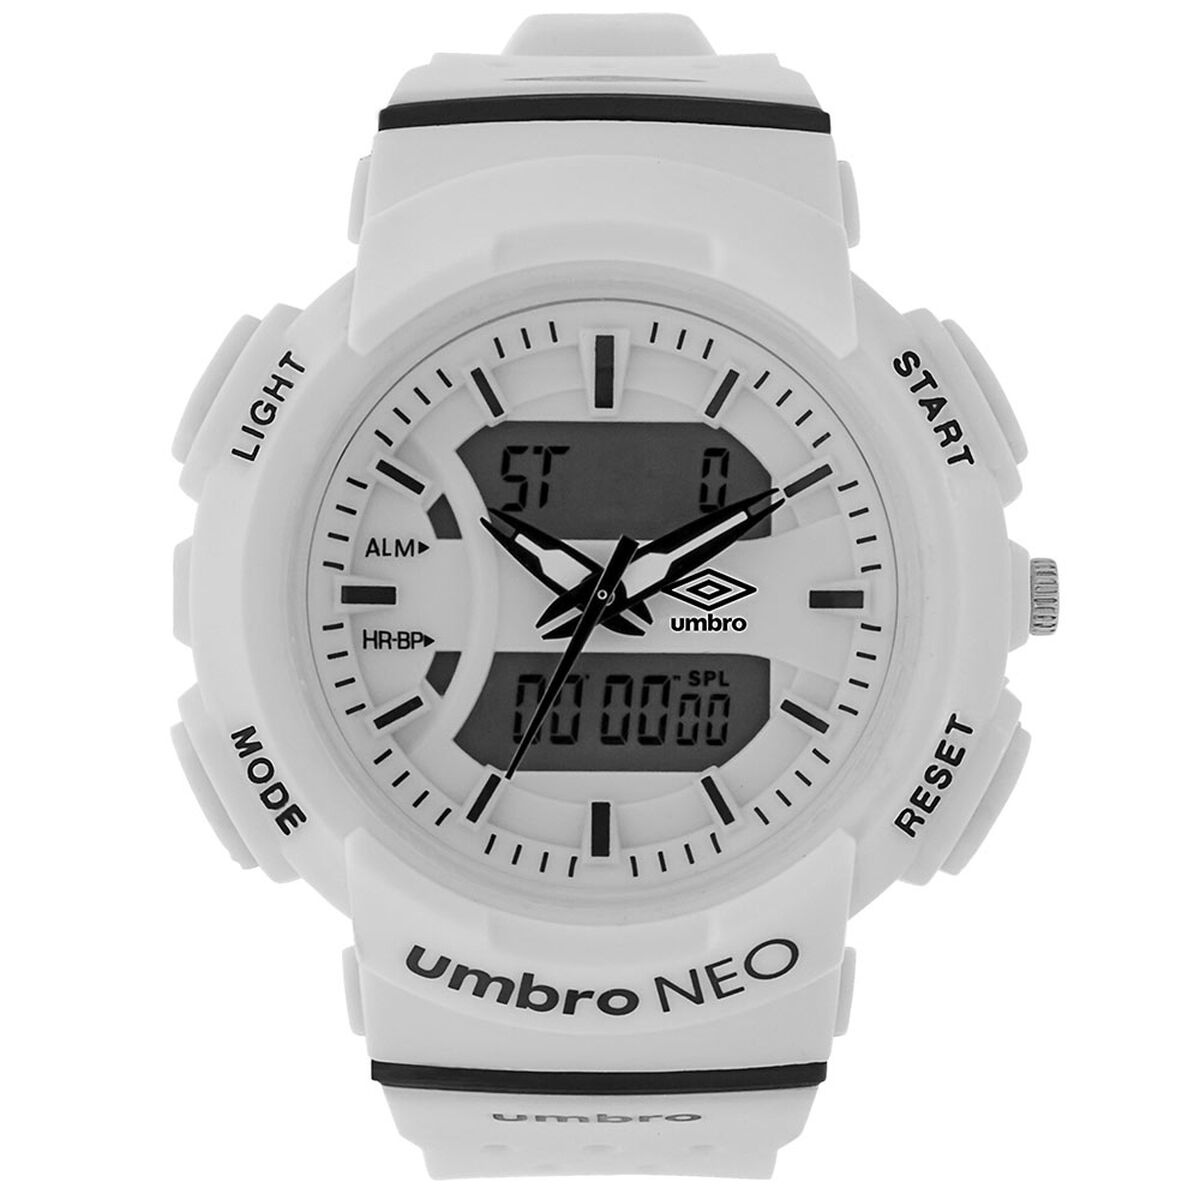 Reloj Digital Umbro UMB-070-1